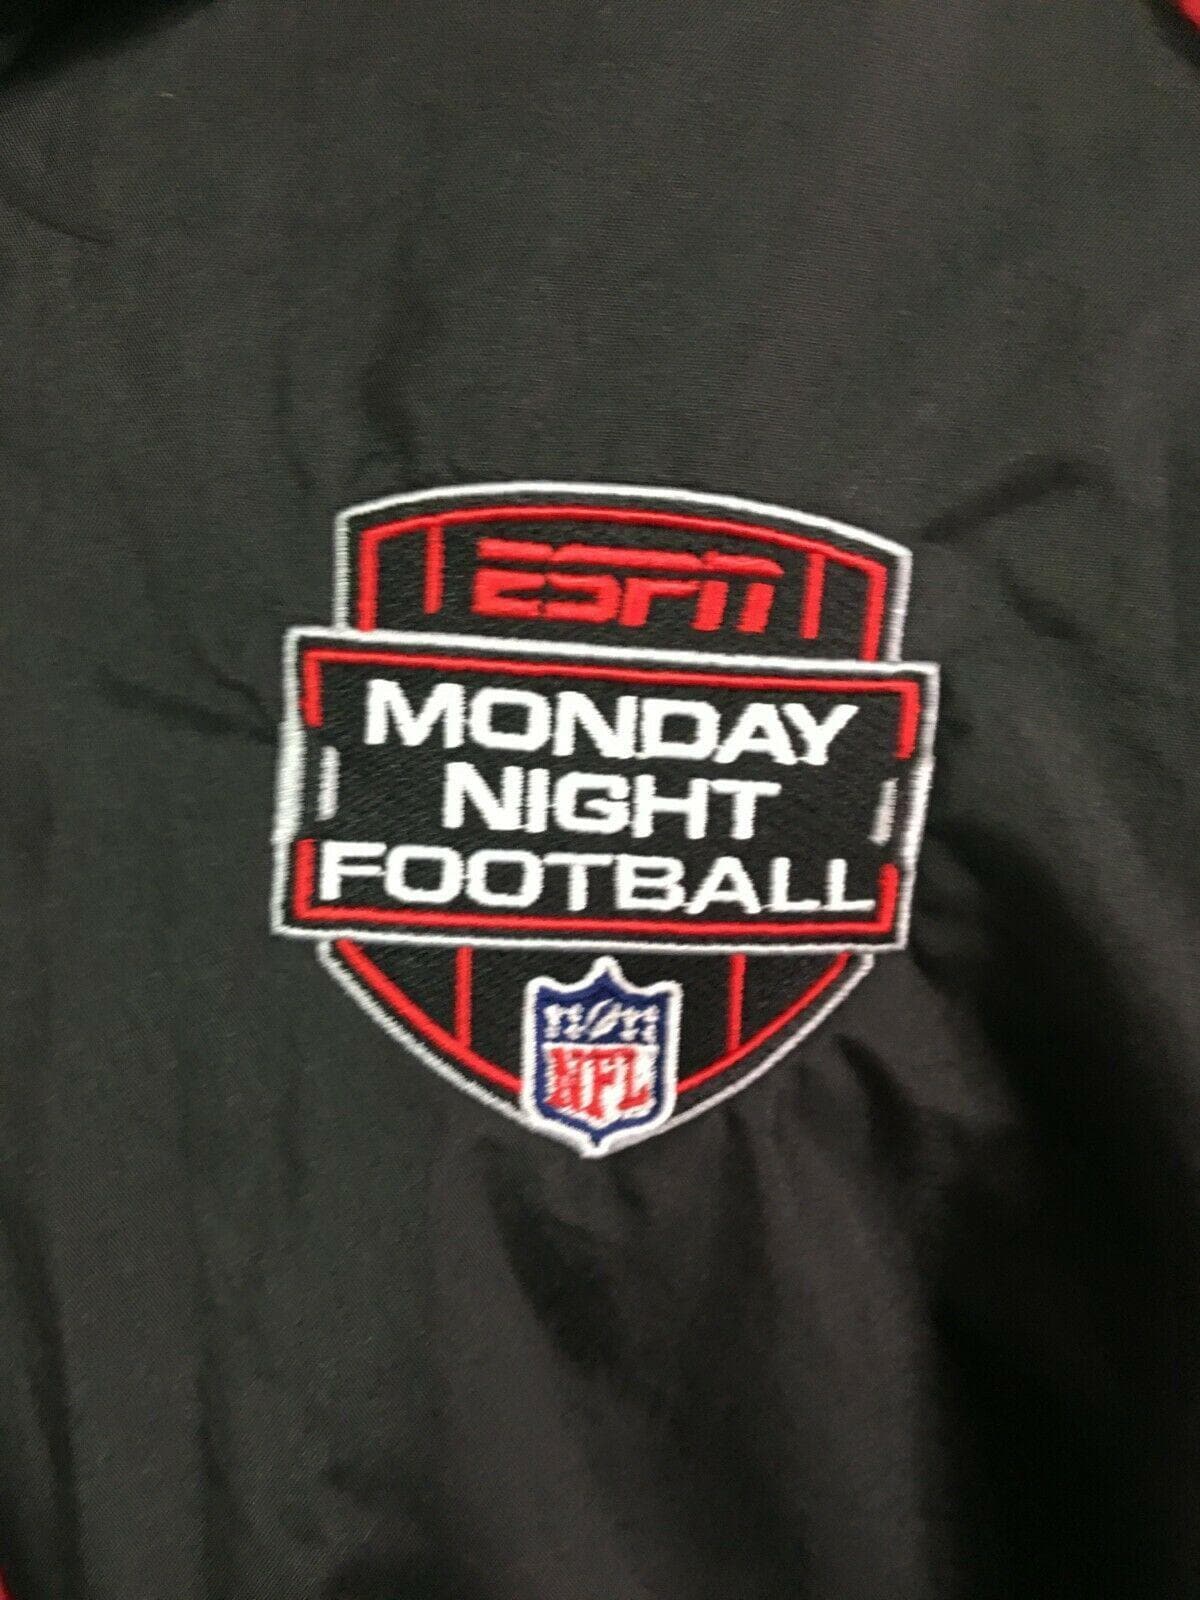 NFL ESPN Monday Night Football Logo Jacket Men's Large